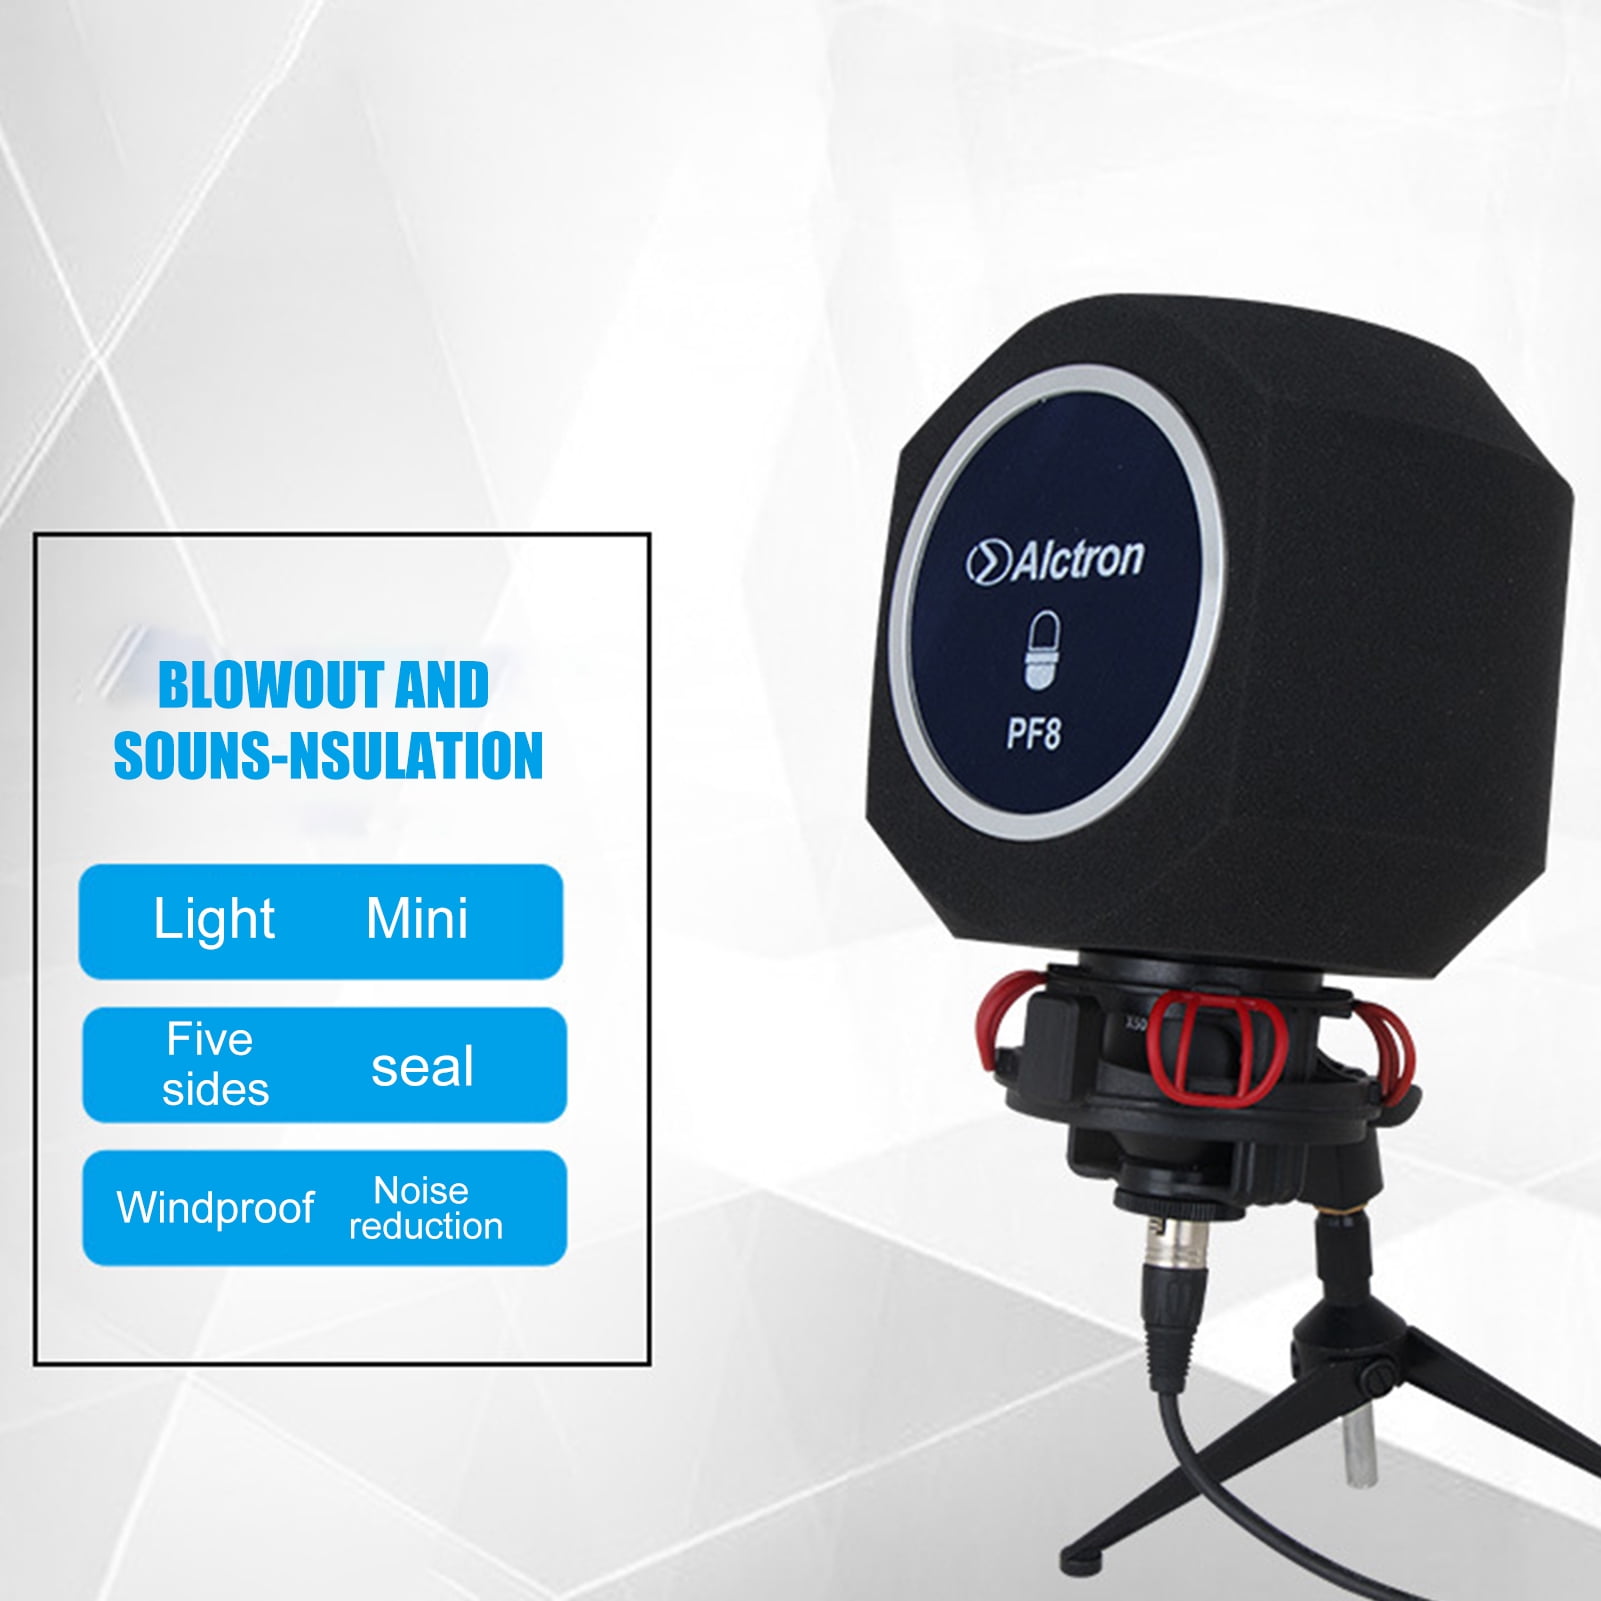 Soundball Pop filter & microphone screen Power studio